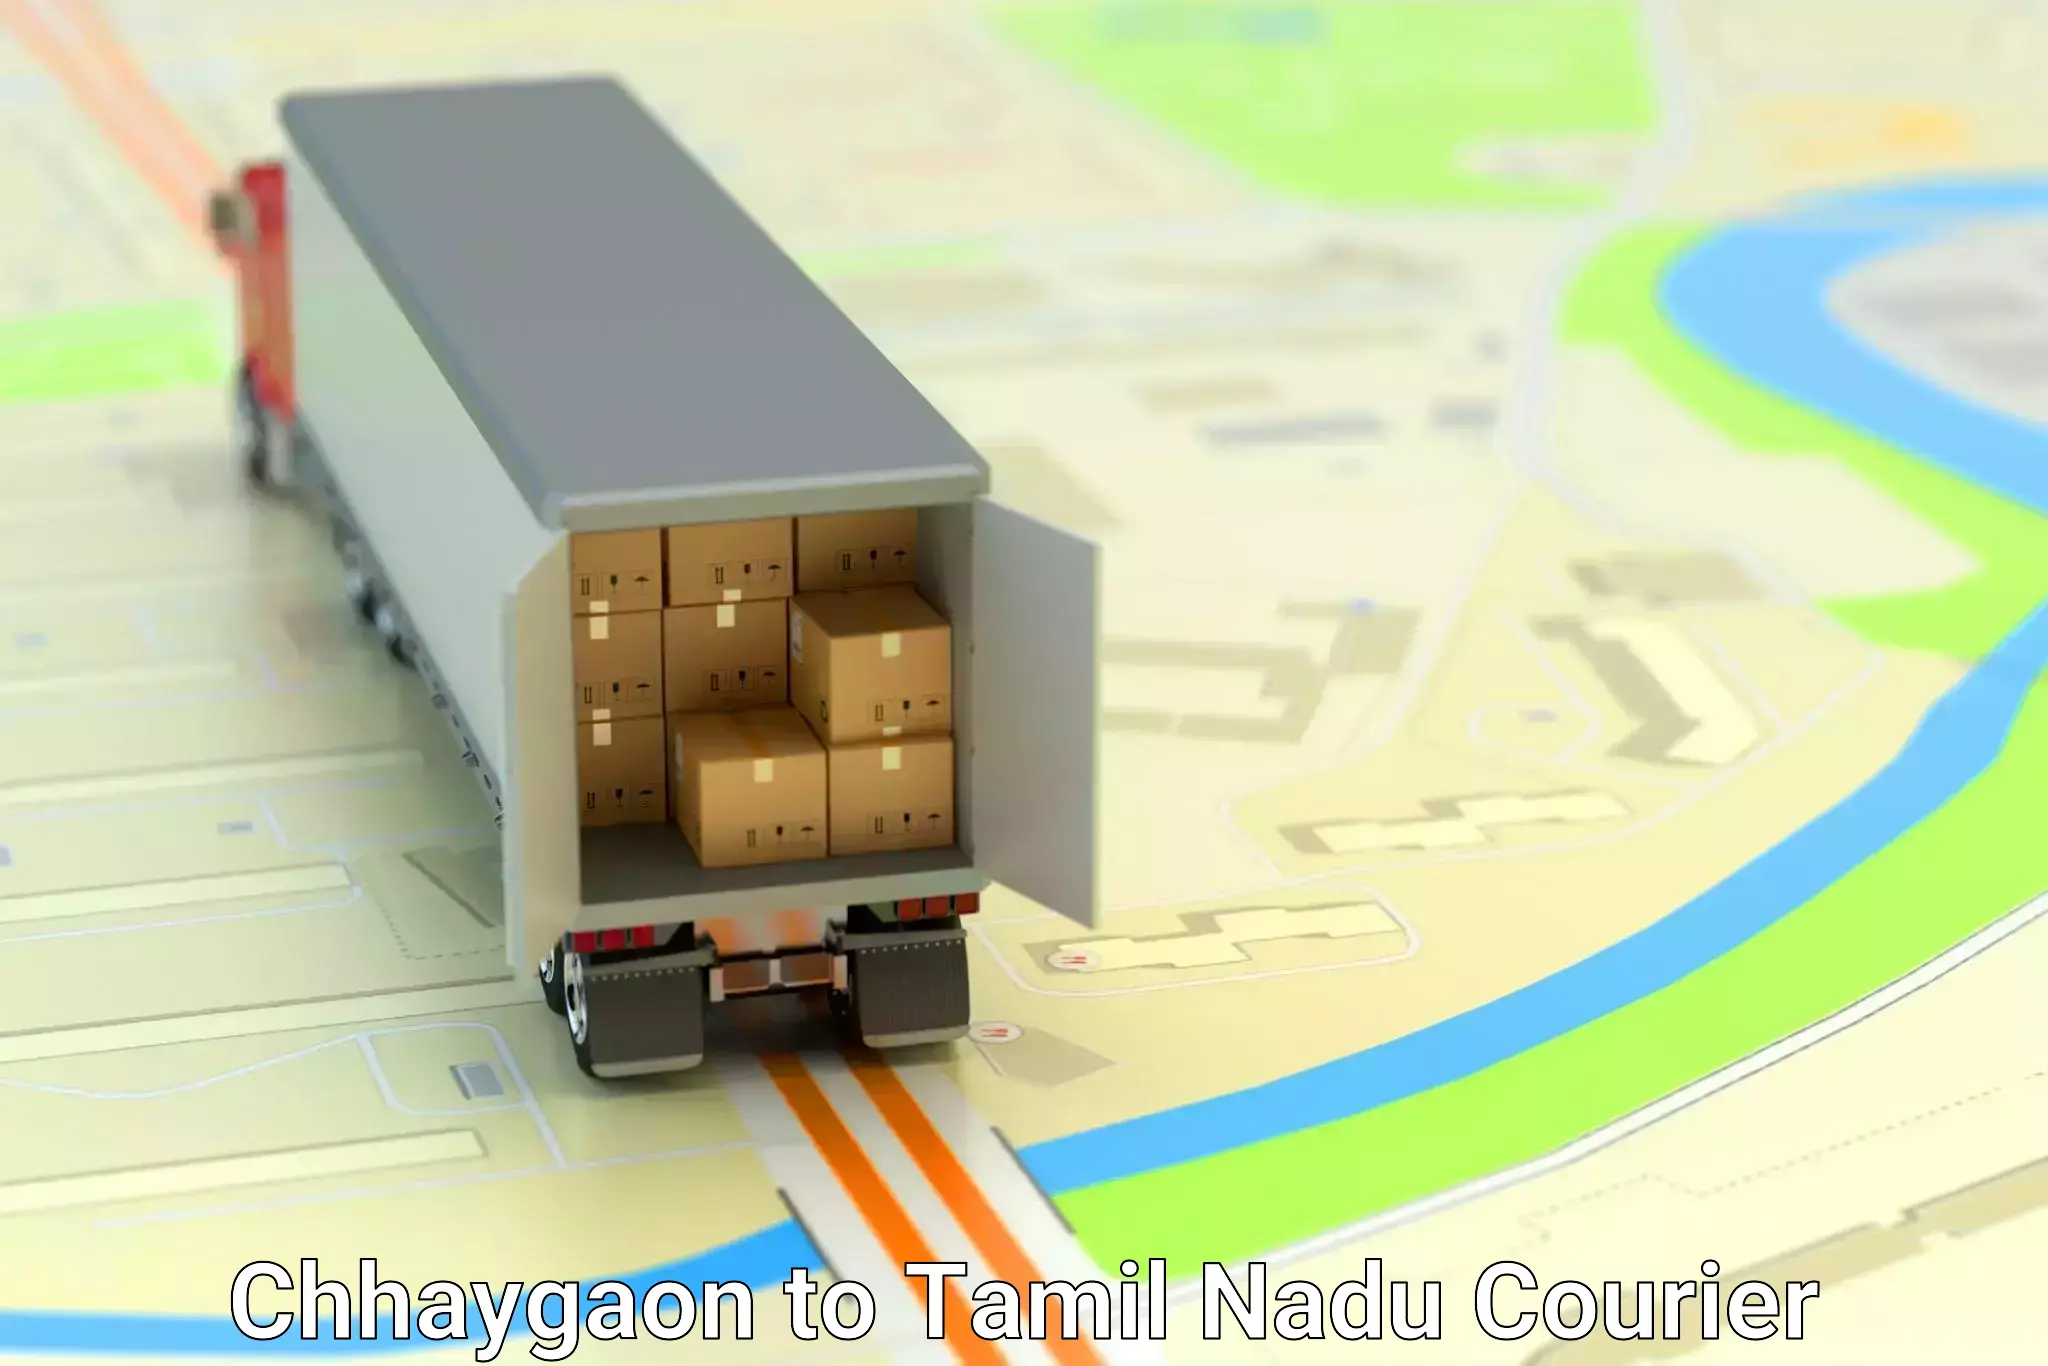 E-commerce fulfillment Chhaygaon to Tamil Nadu